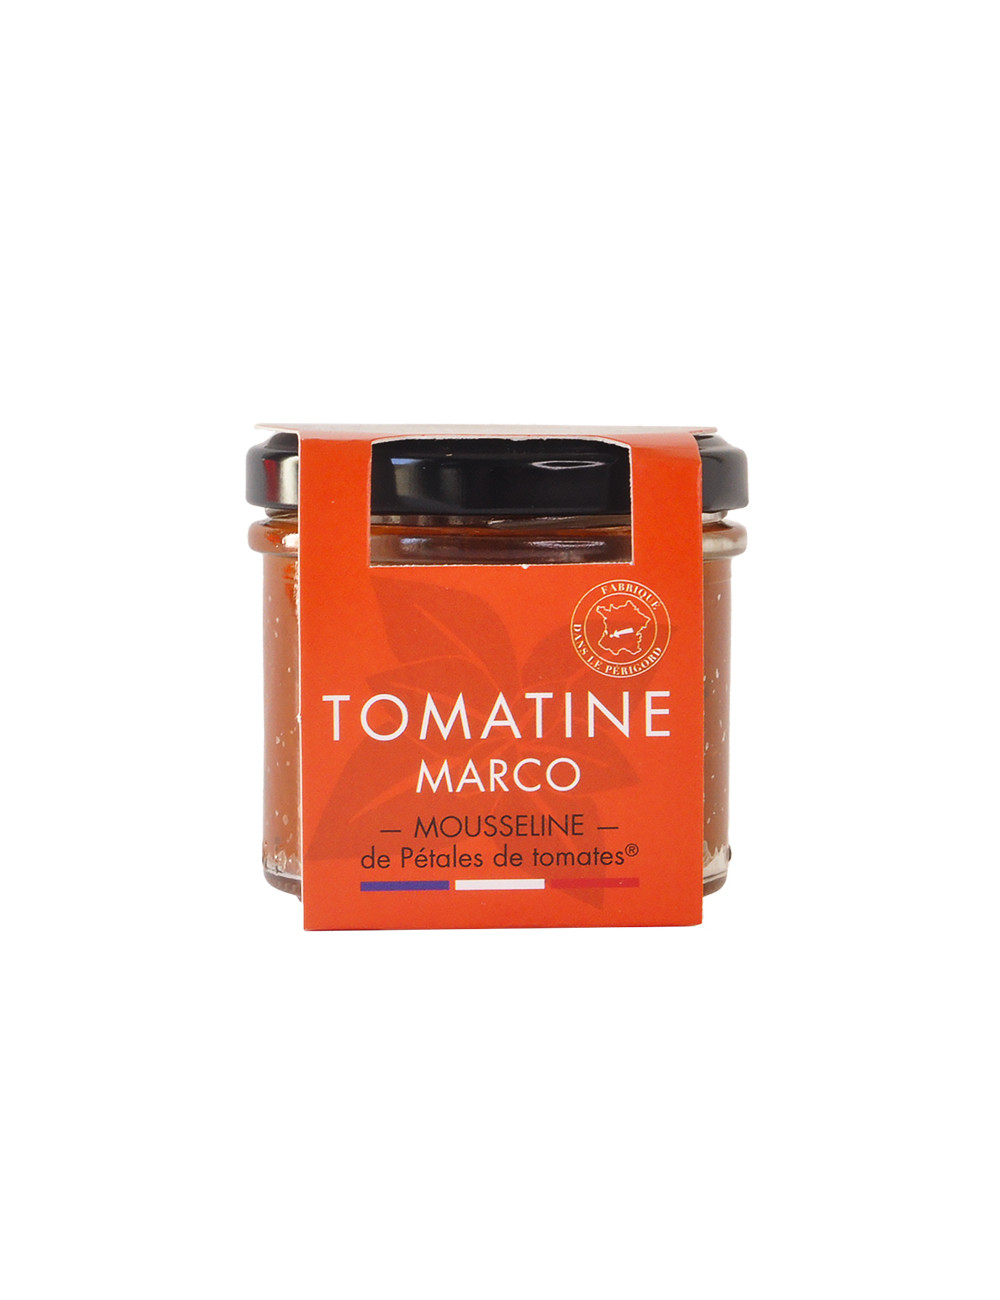 Marco tomatine Marc peyrey